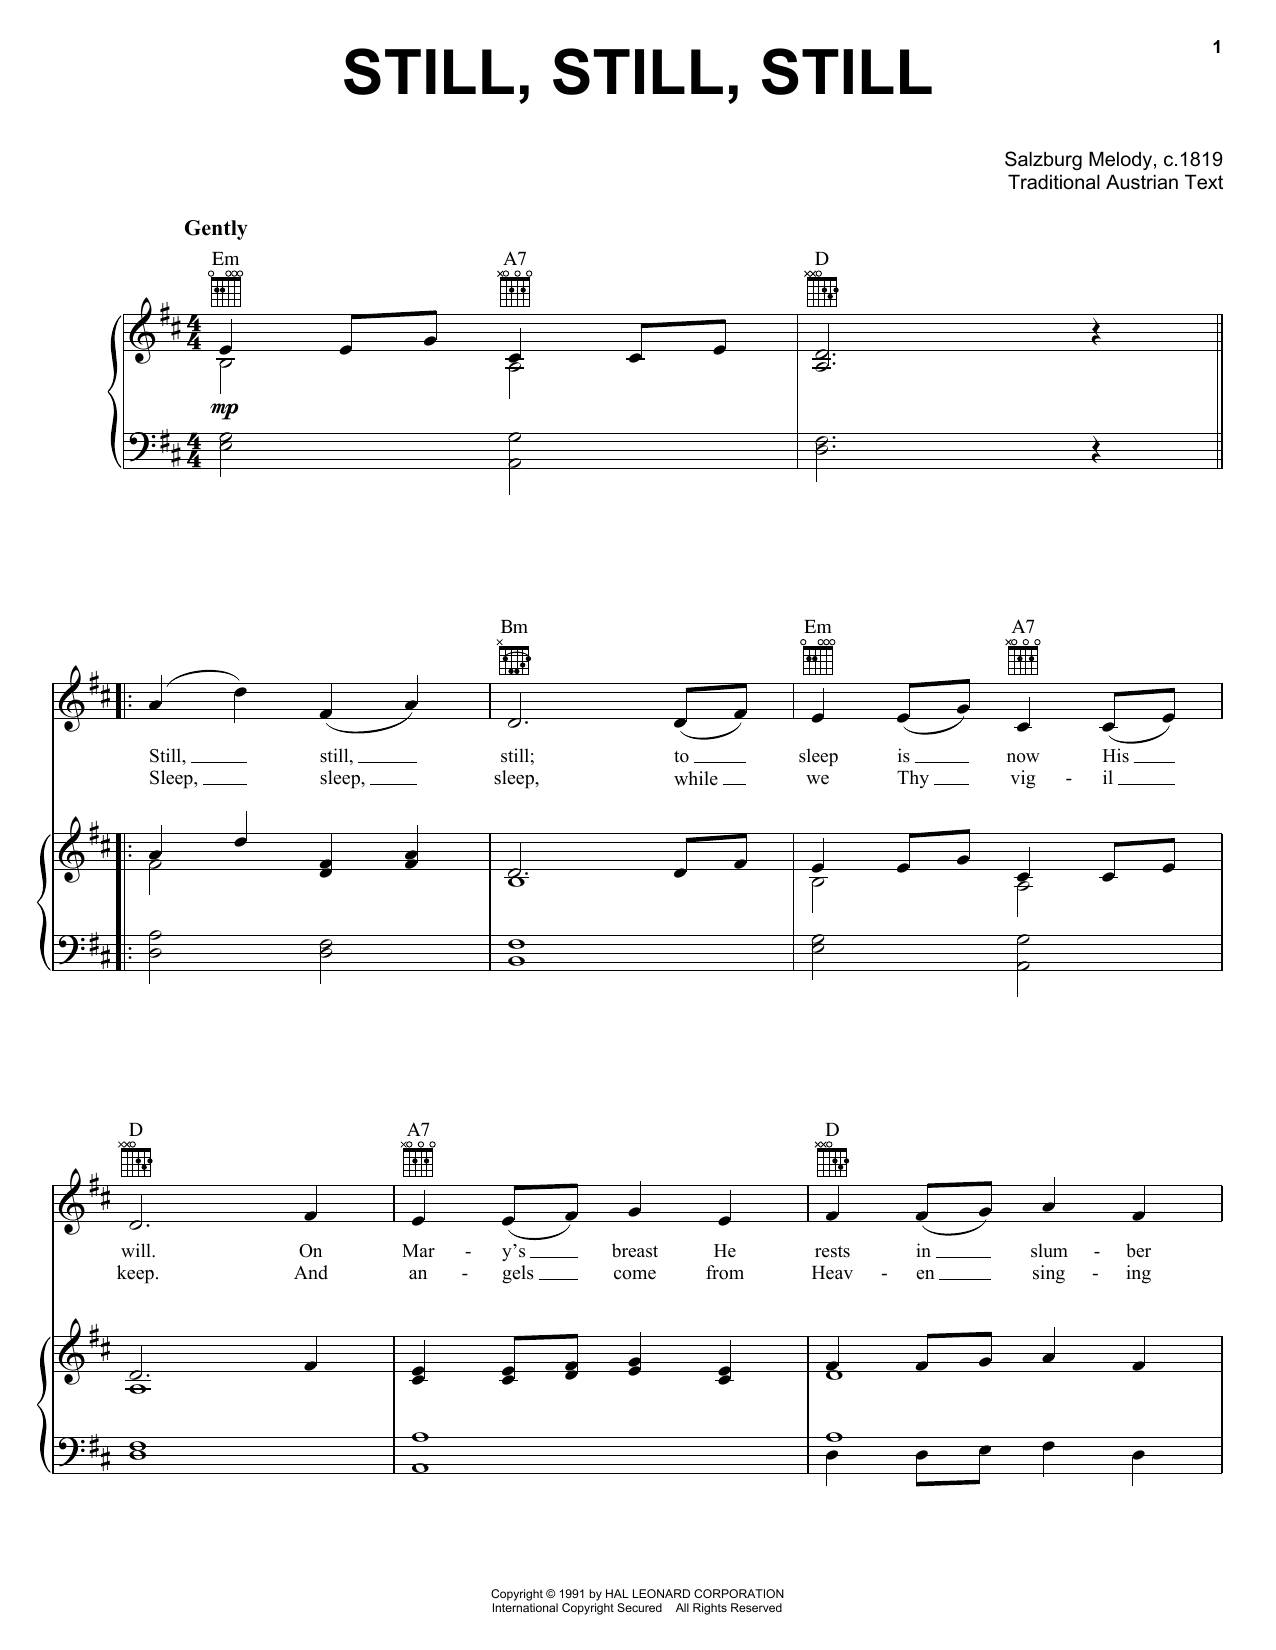 Traditional Still, Still, Still Sheet Music Notes & Chords for Violin and Piano - Download or Print PDF